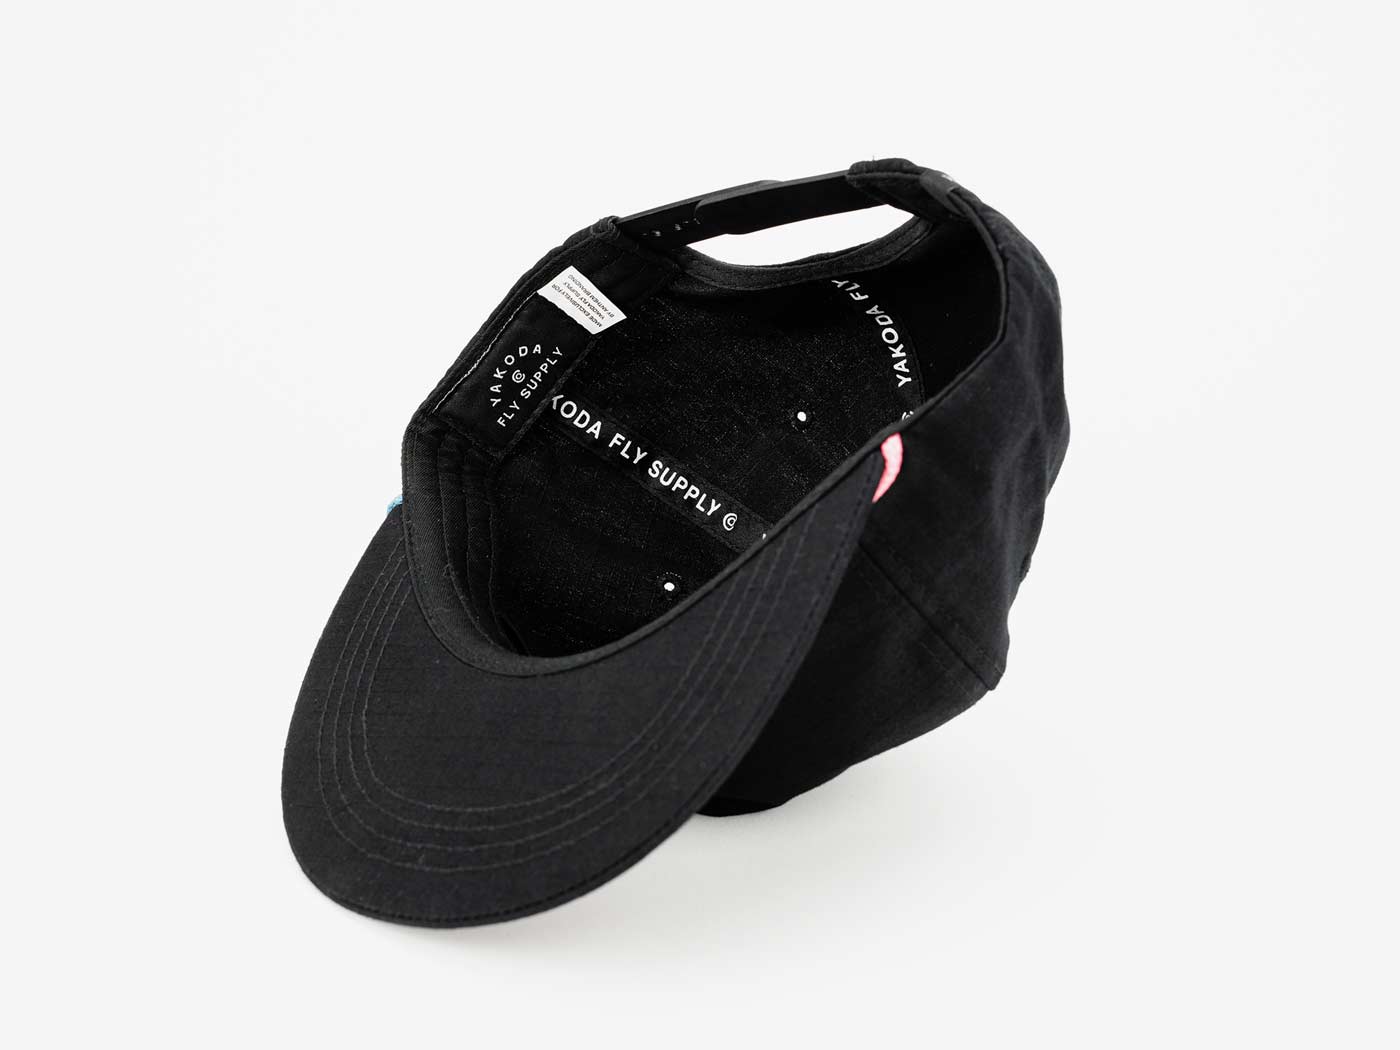 Shop Hat – Black